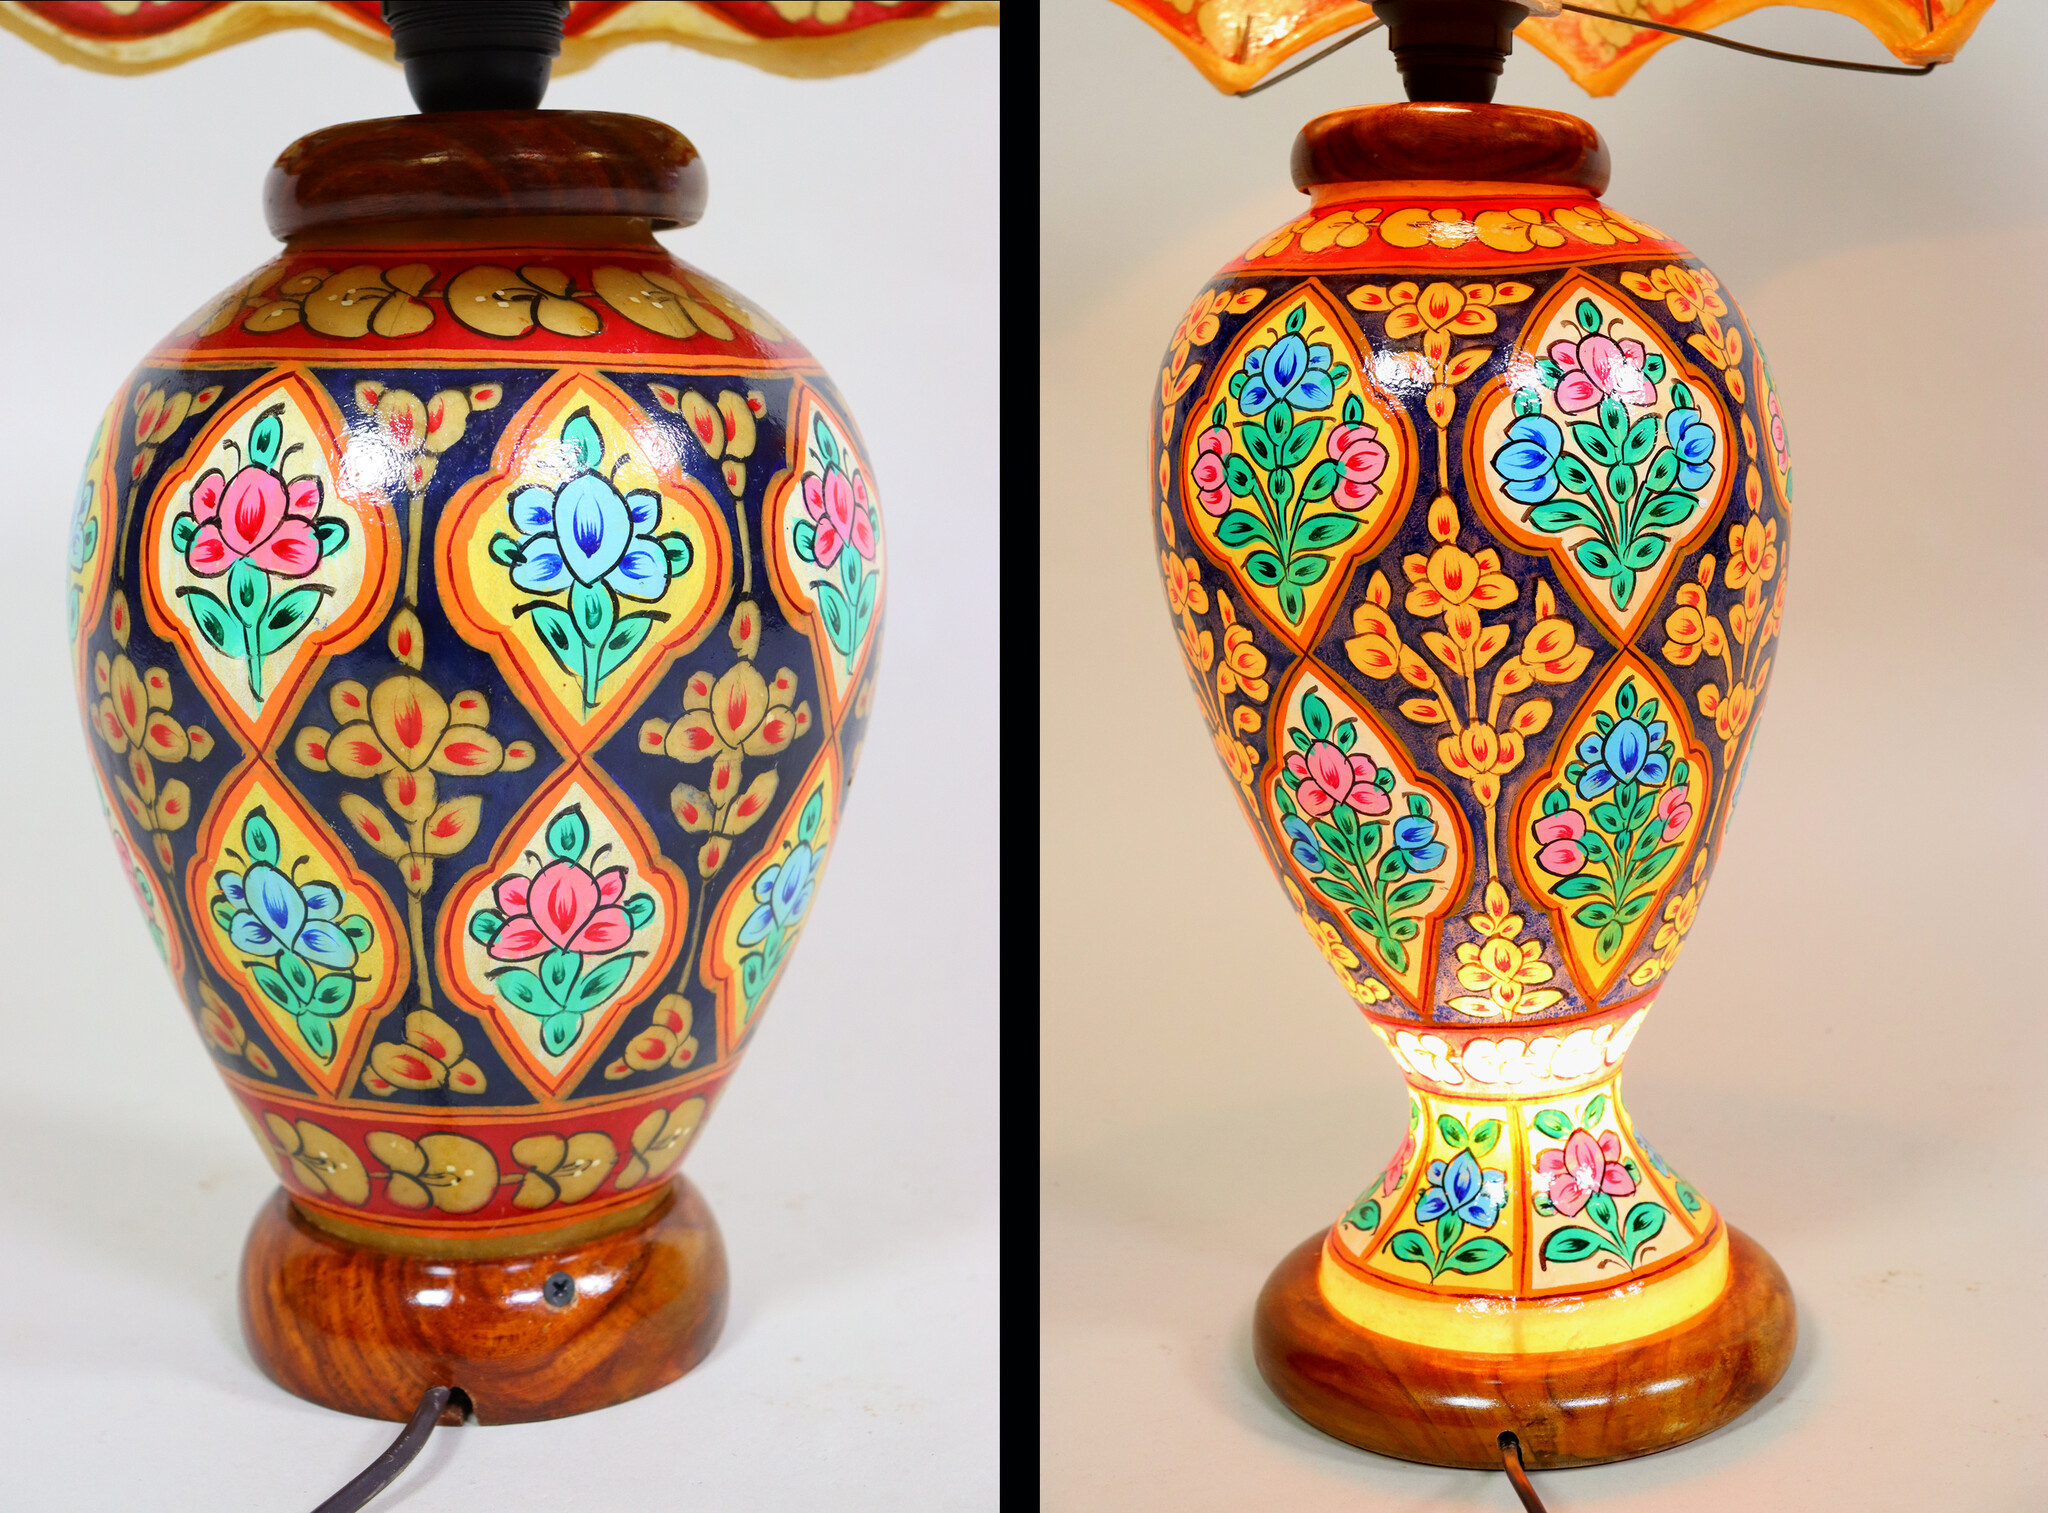 orientalische handbemalte Lampe Kamelleder Tischlampe Nachttischlamp Tischleuchte Nachtlampe Stehleuchte Handarbeit aus Multan Pakistan 23/ 3